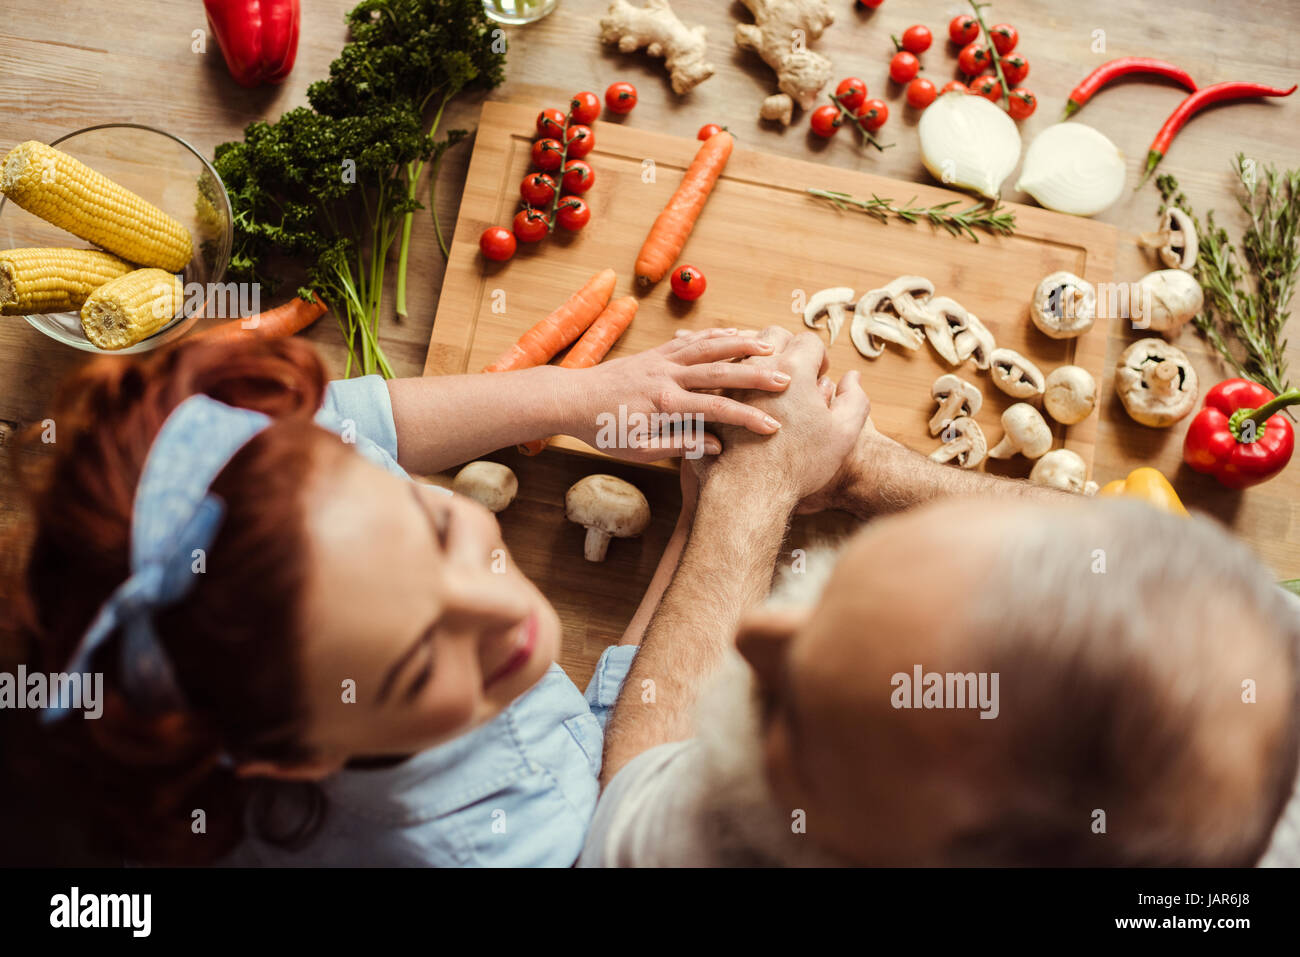 Couple preparing vegan food Stock Photo